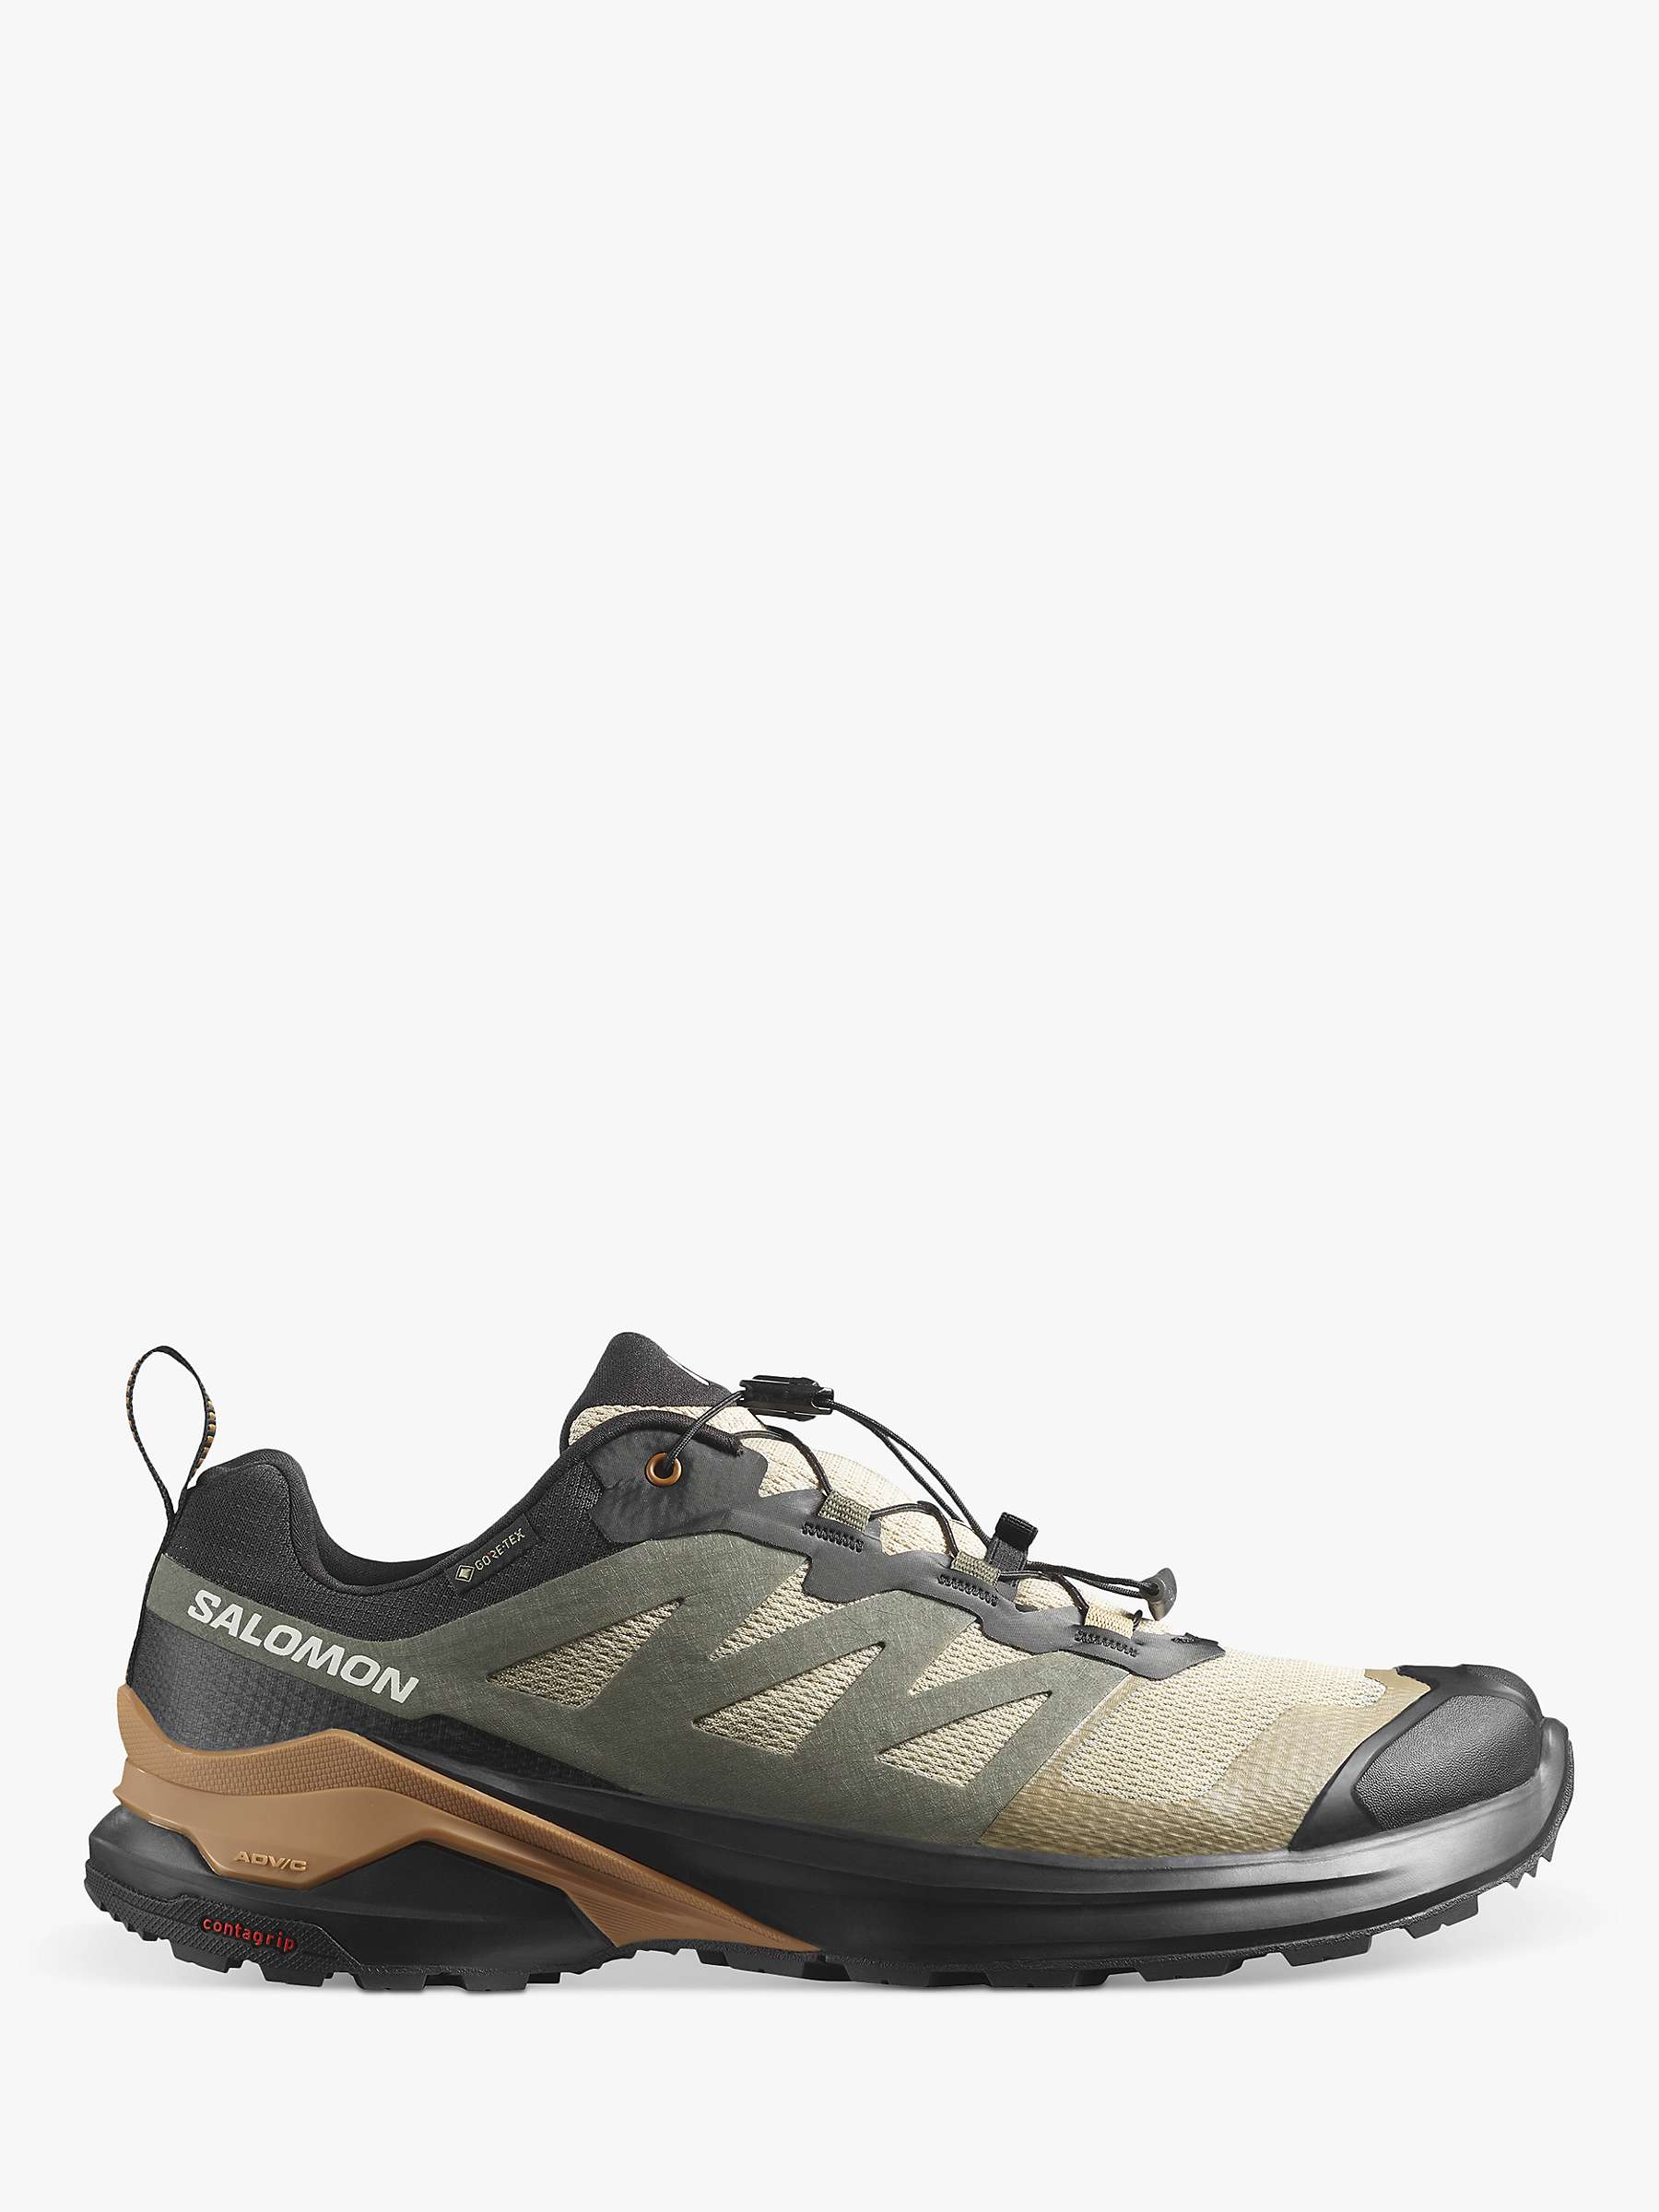 Buy Salomon X-Adventure Men's Gore-Tex Waterproof Shoes, Brown/Multi Online at johnlewis.com